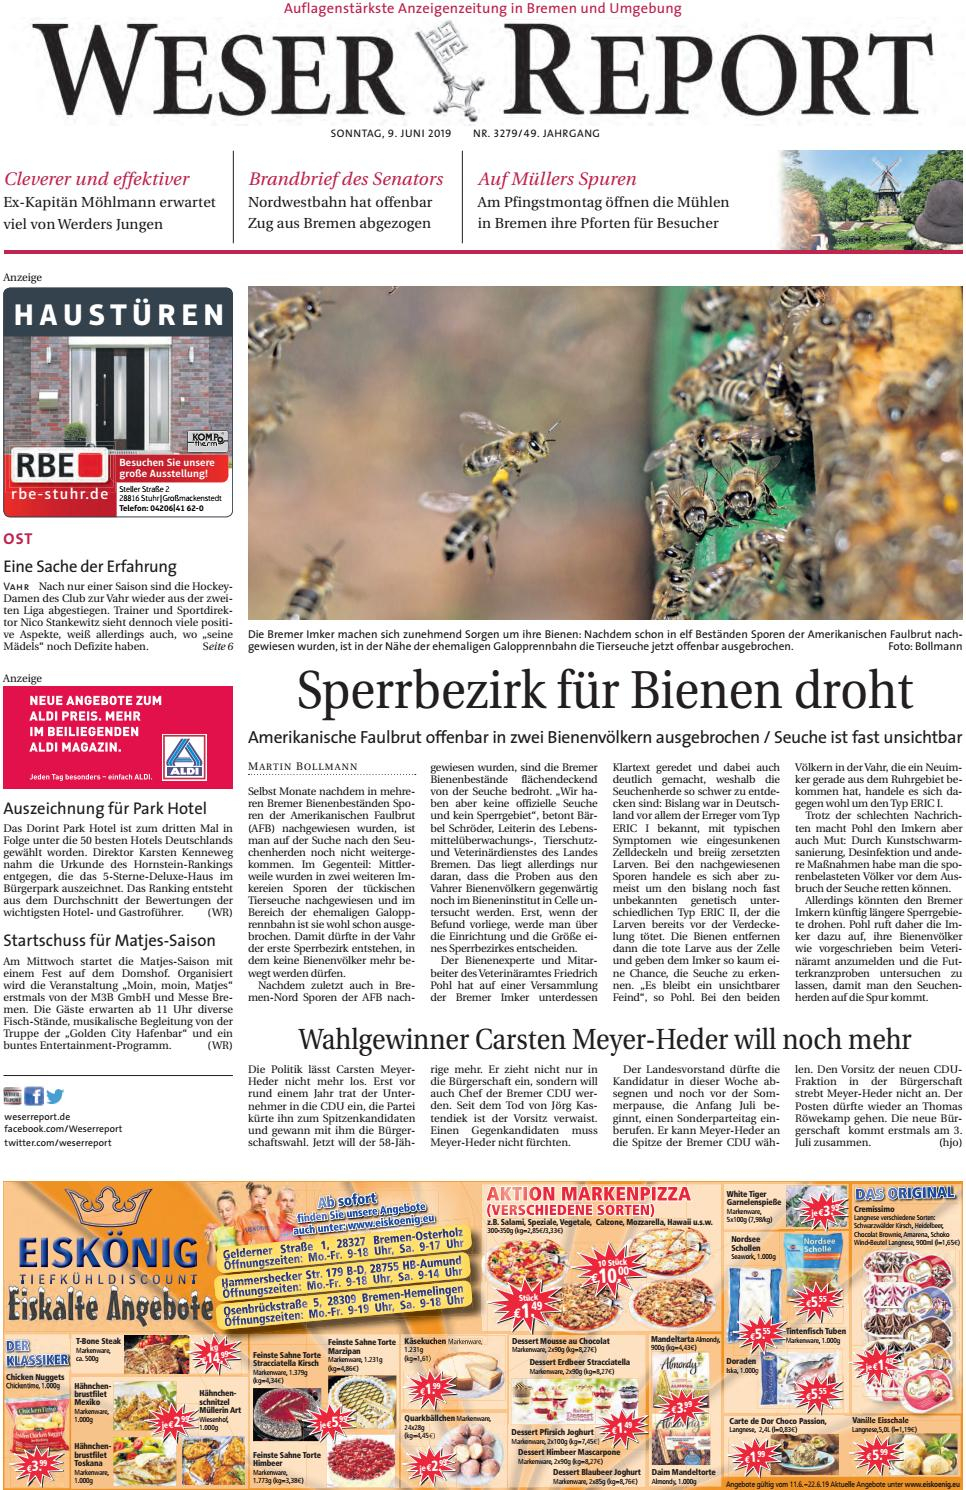 Weser Report - Ost Vom 09.06.2019 By Kps Verlagsgesellschaft ... tout Lame.comde Cumaru